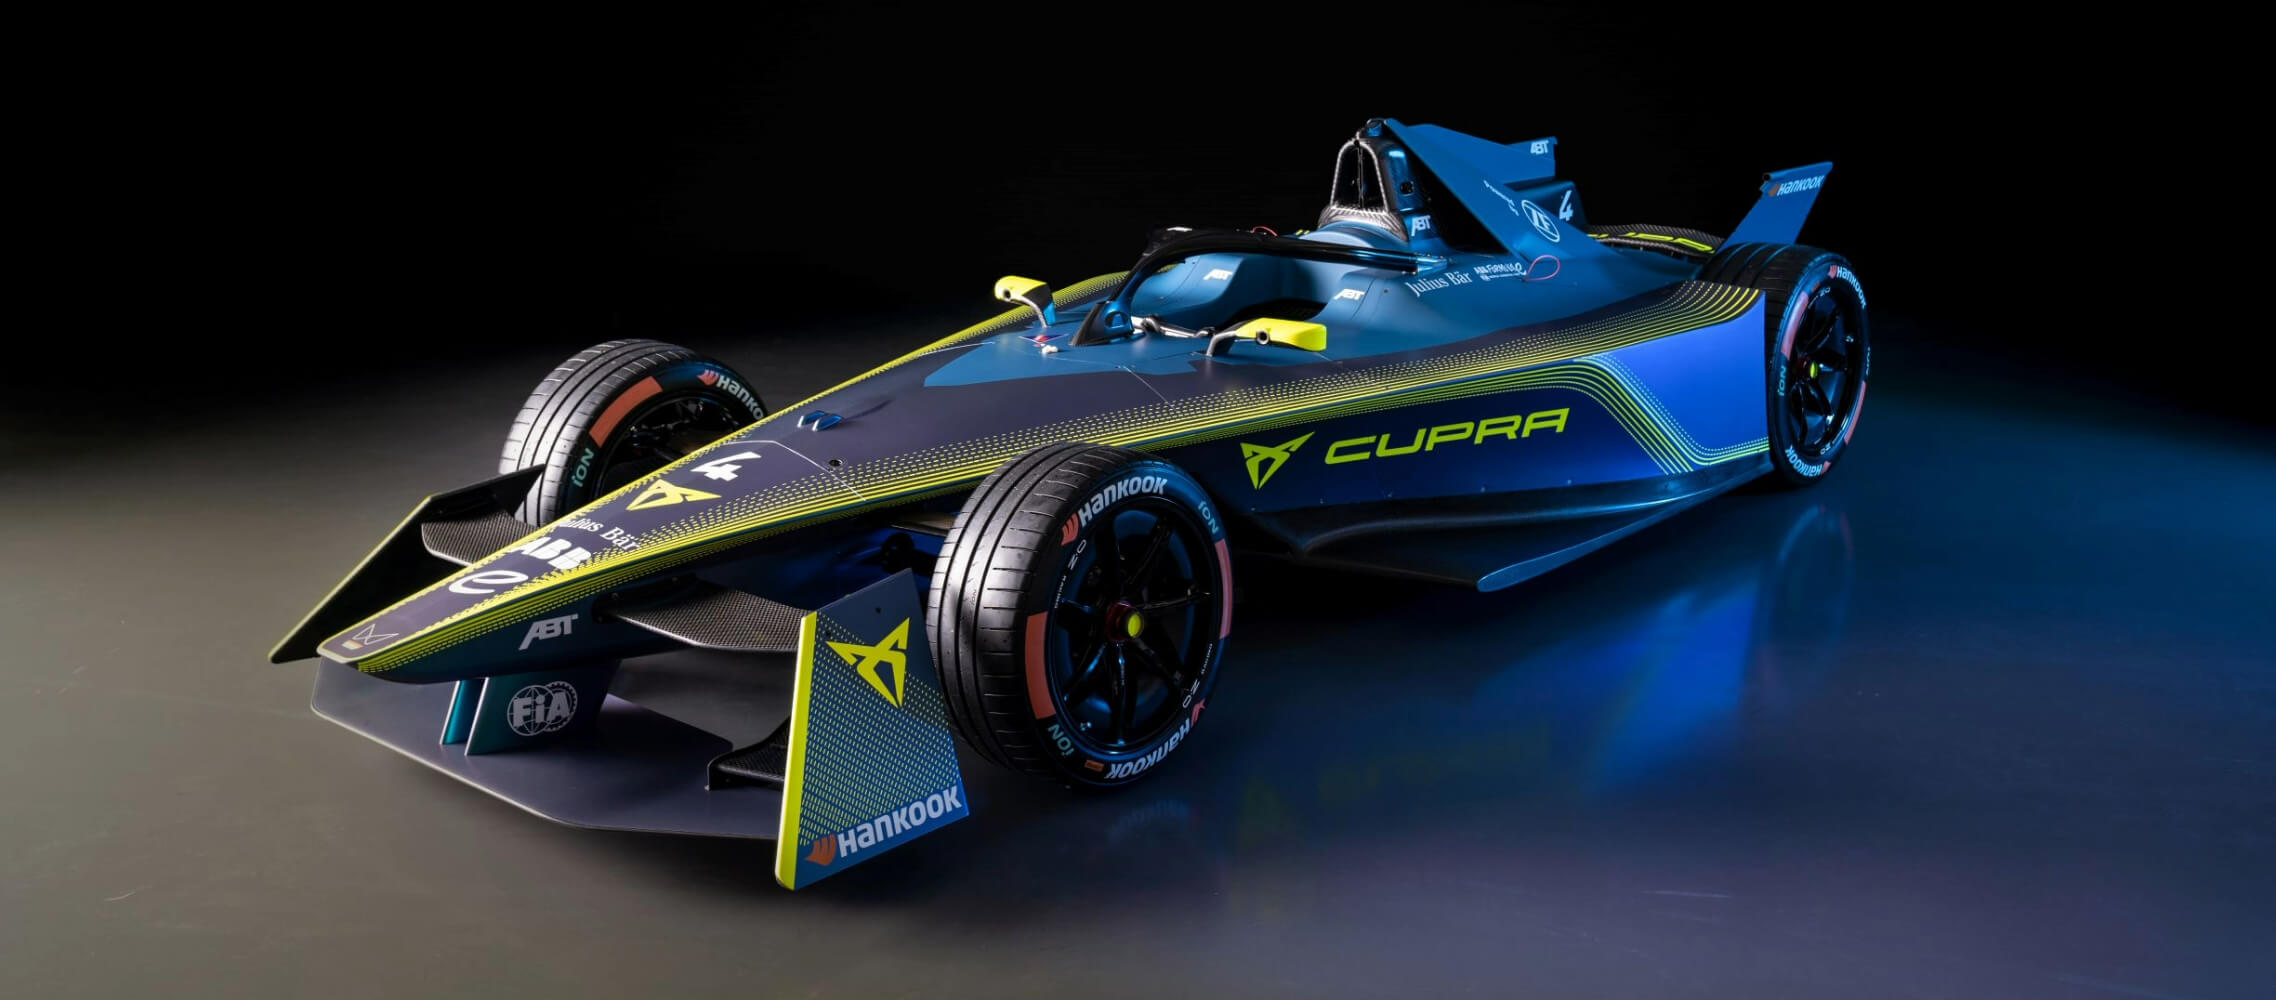 The ABT CUPRA Formula E racecar